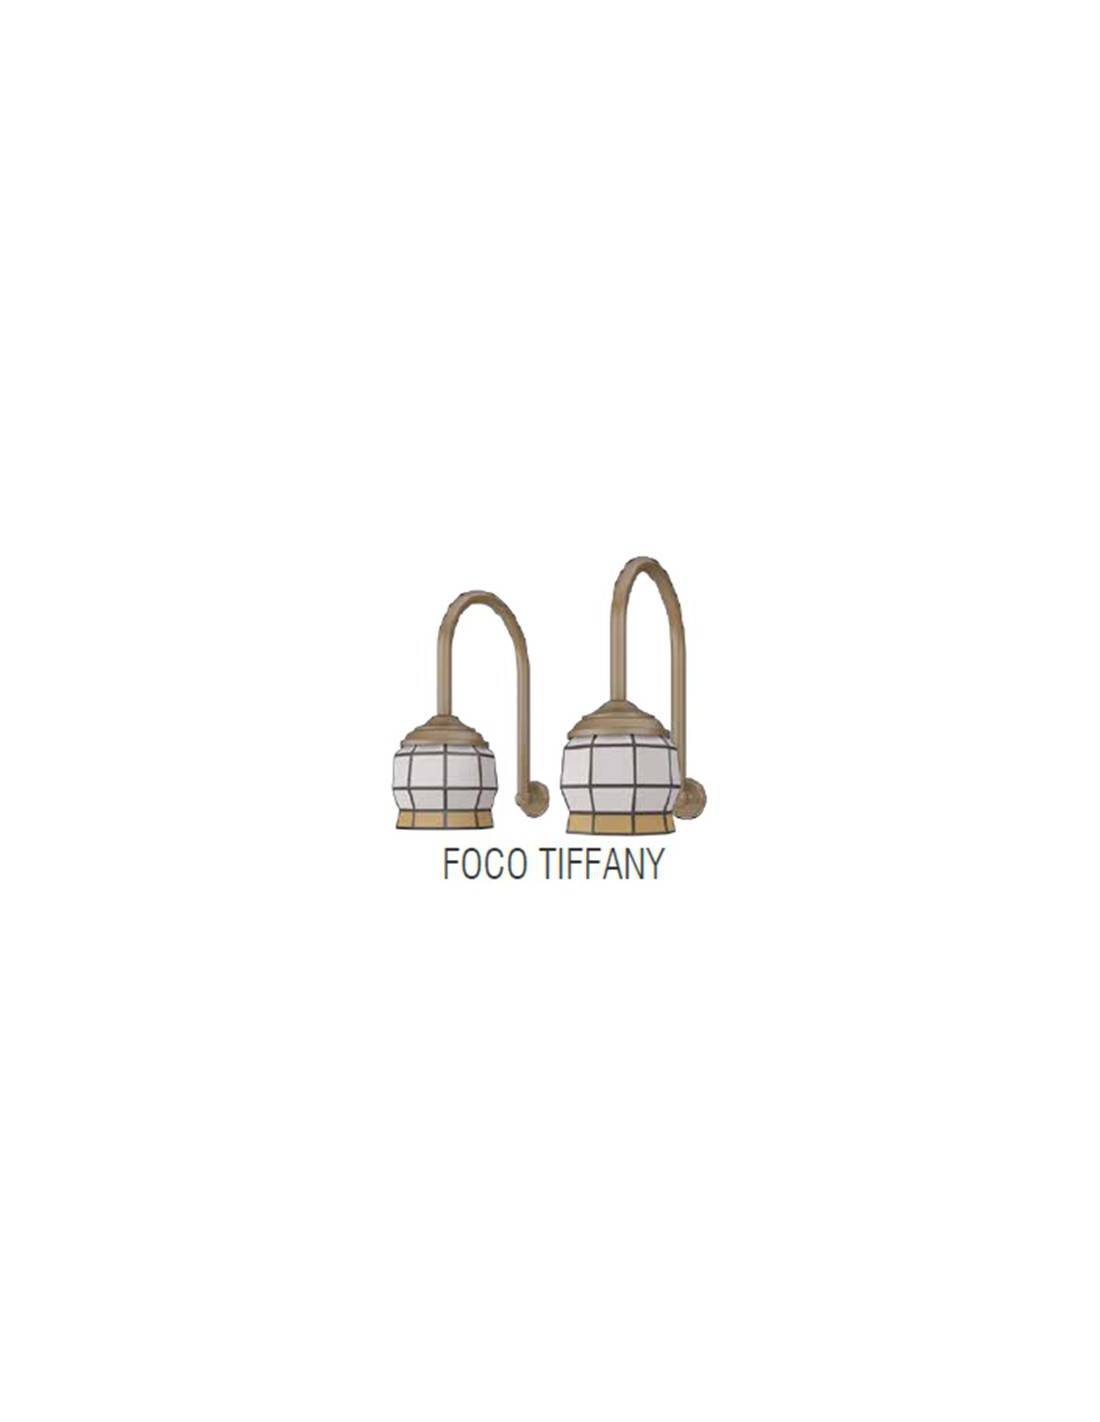 Focos Tiffany